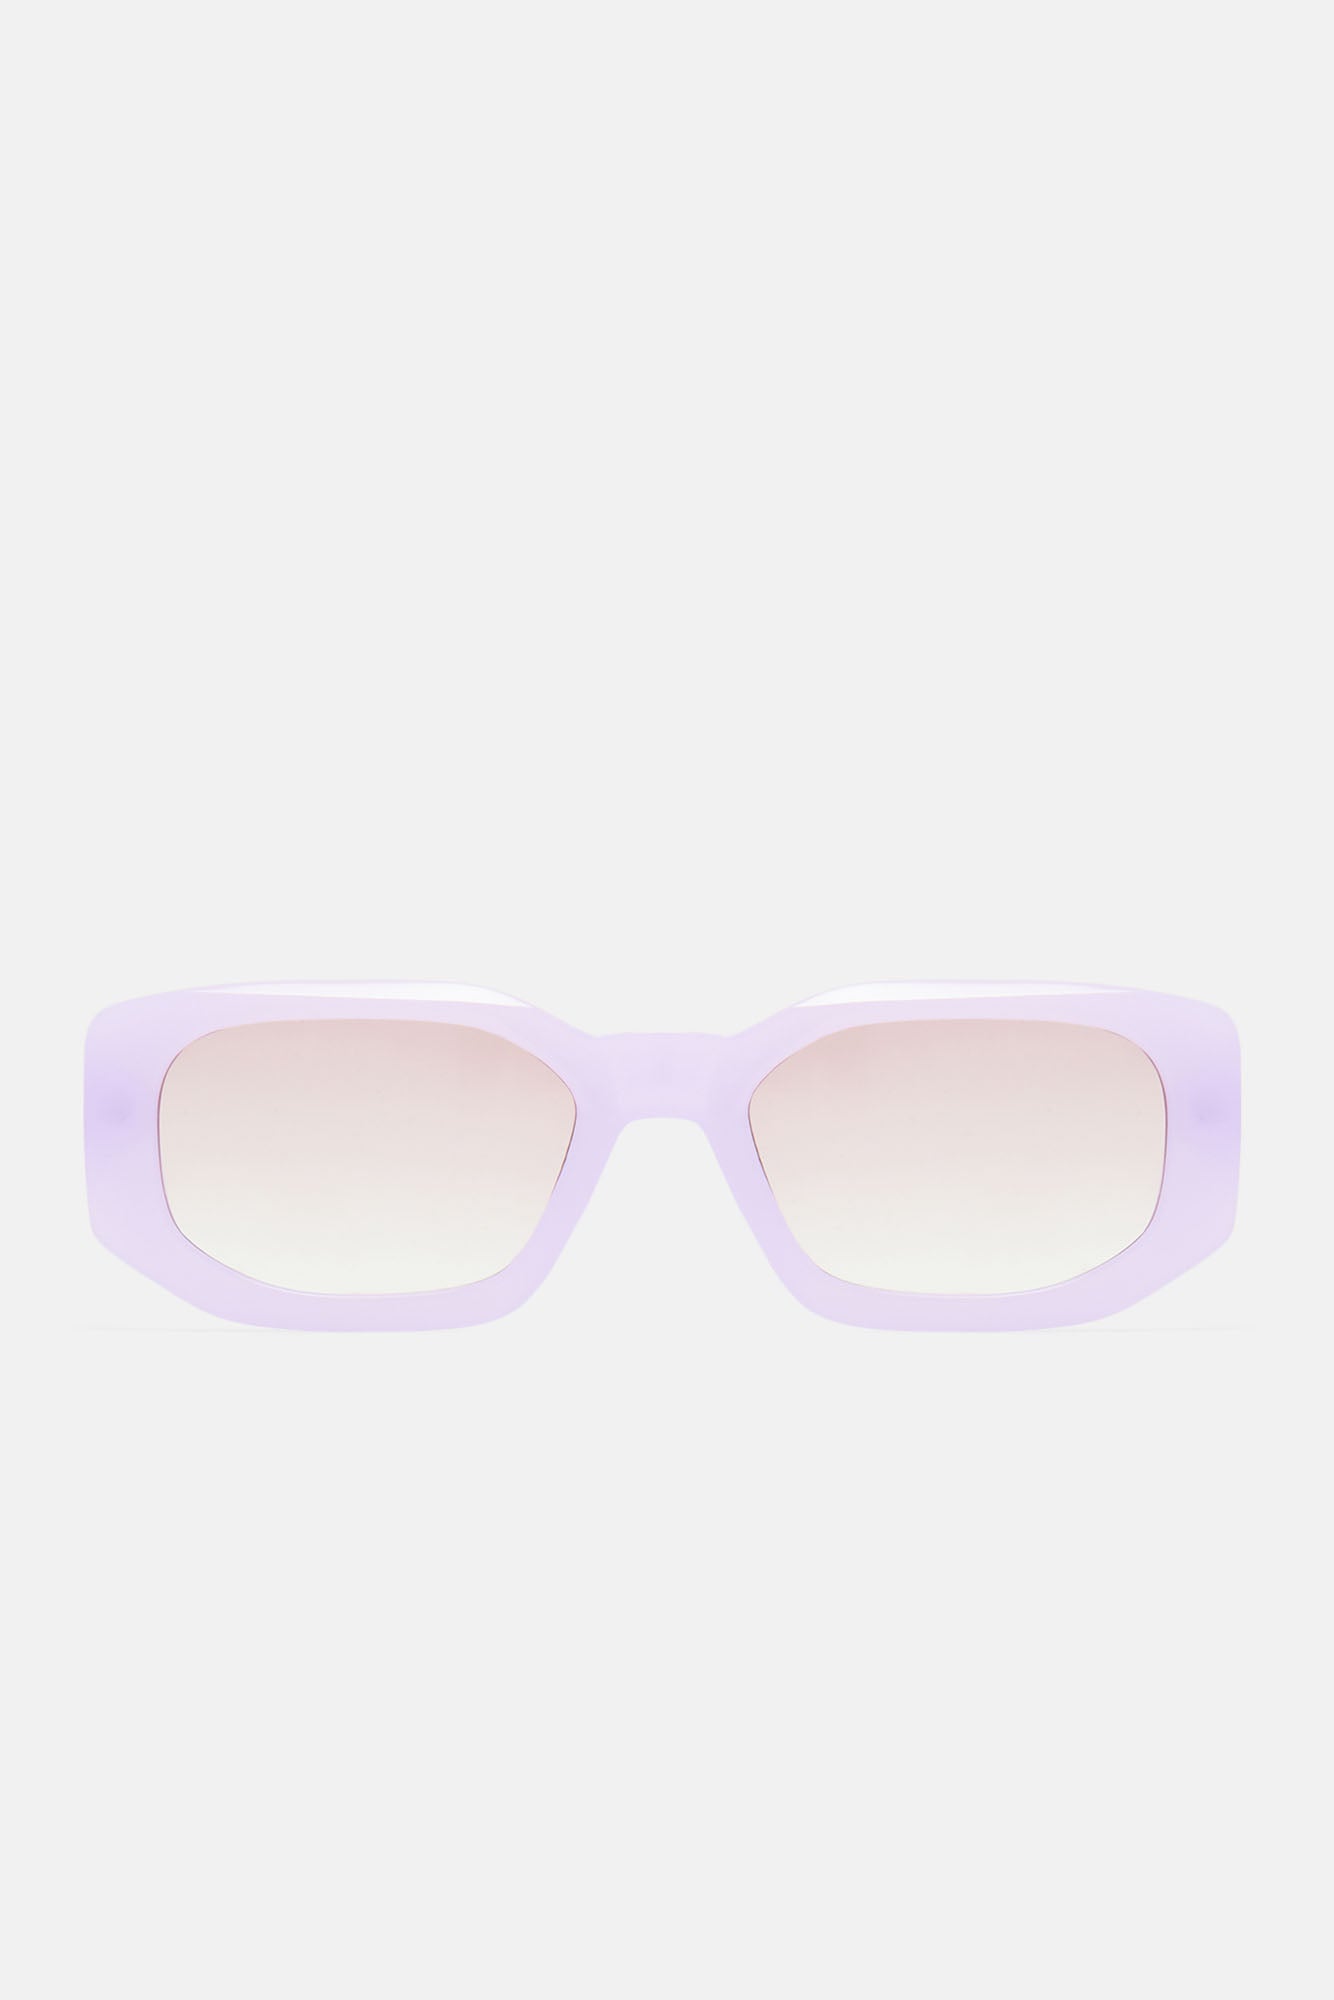 Stunning Ain't Easy Sunglasses - Purple